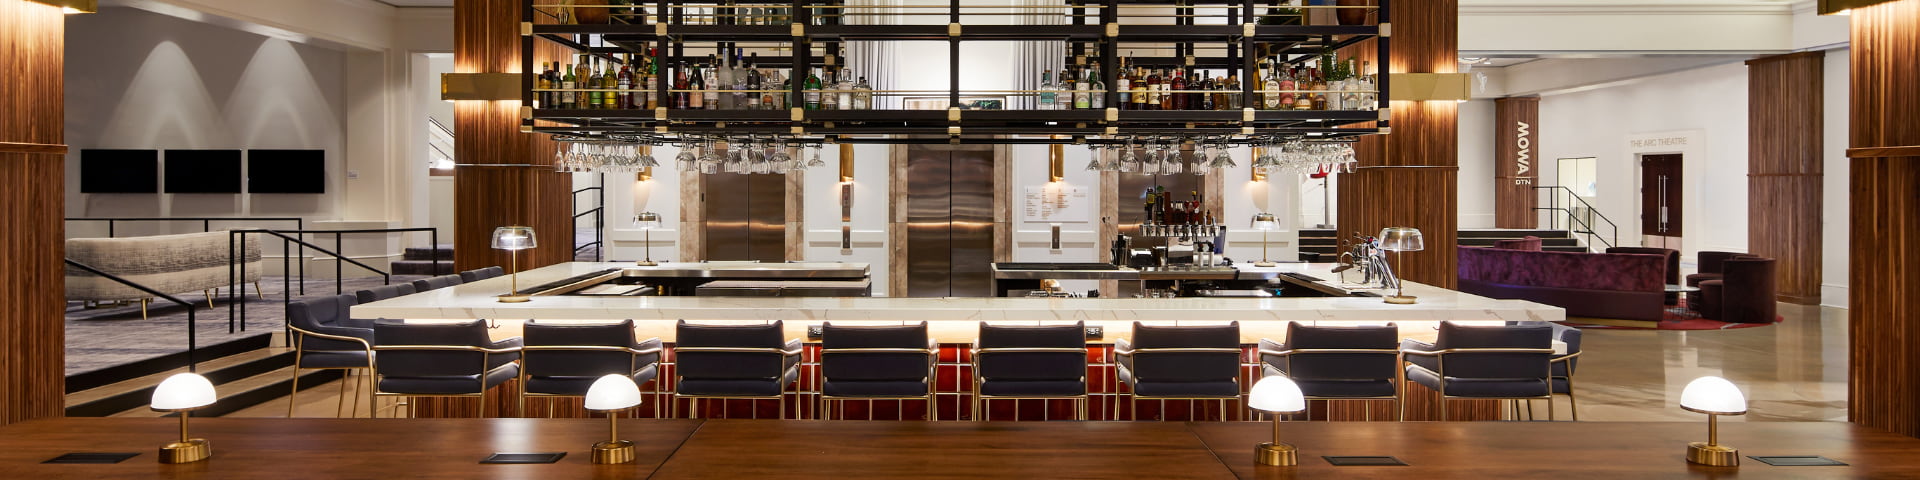 the Bar in Saint Kate - The Arts Hotel's lobby